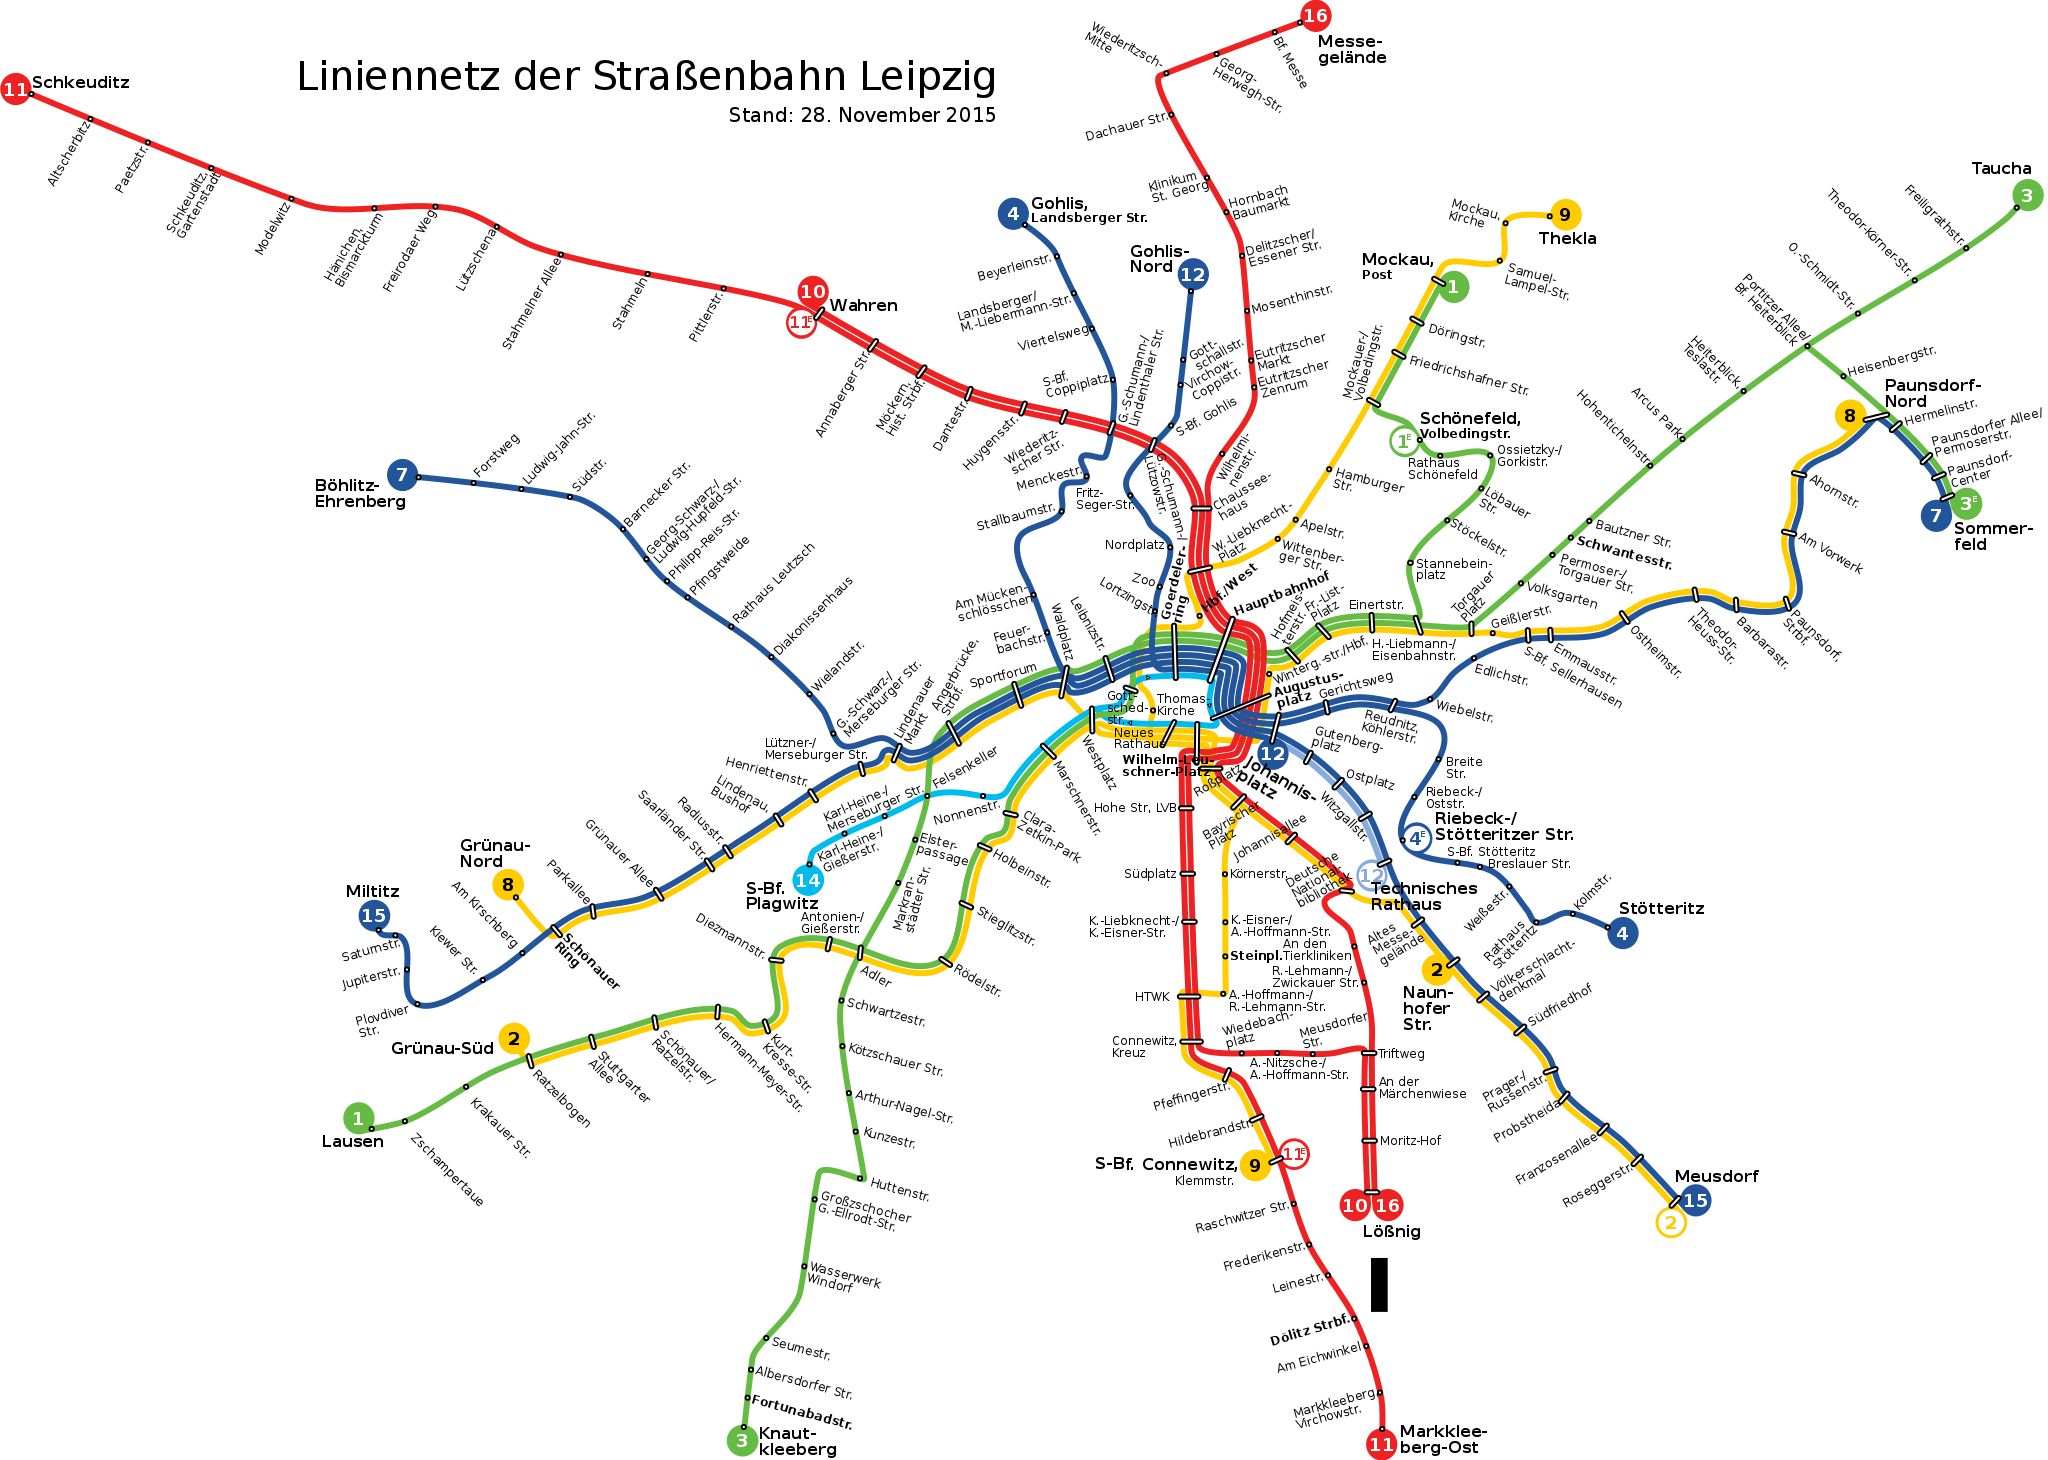 map of leipzig